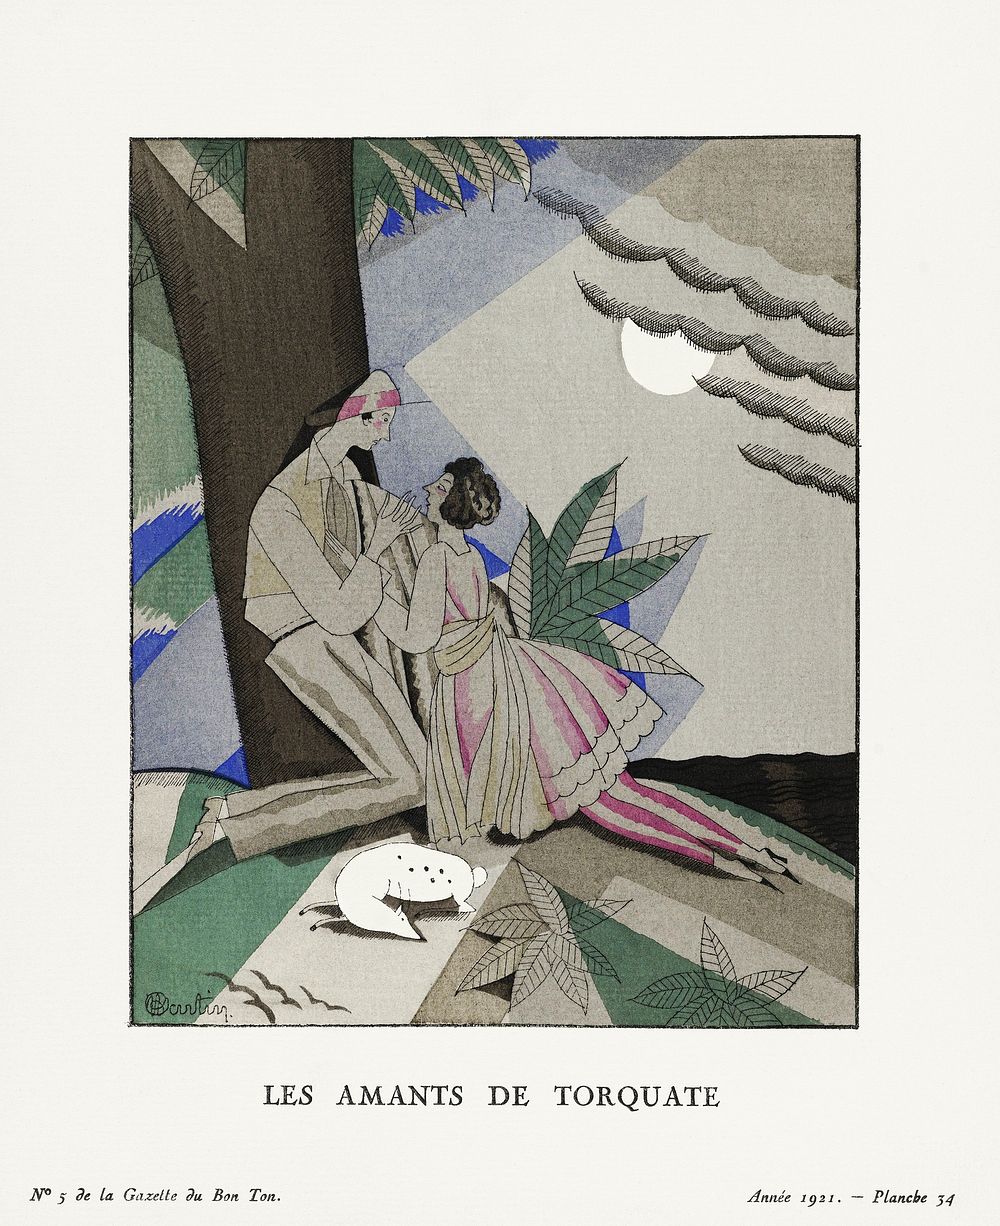 Les amants de torquate (1921) fashion plate in high resolution by Charles Martin, published in Gazette du Bon Ton. Original…